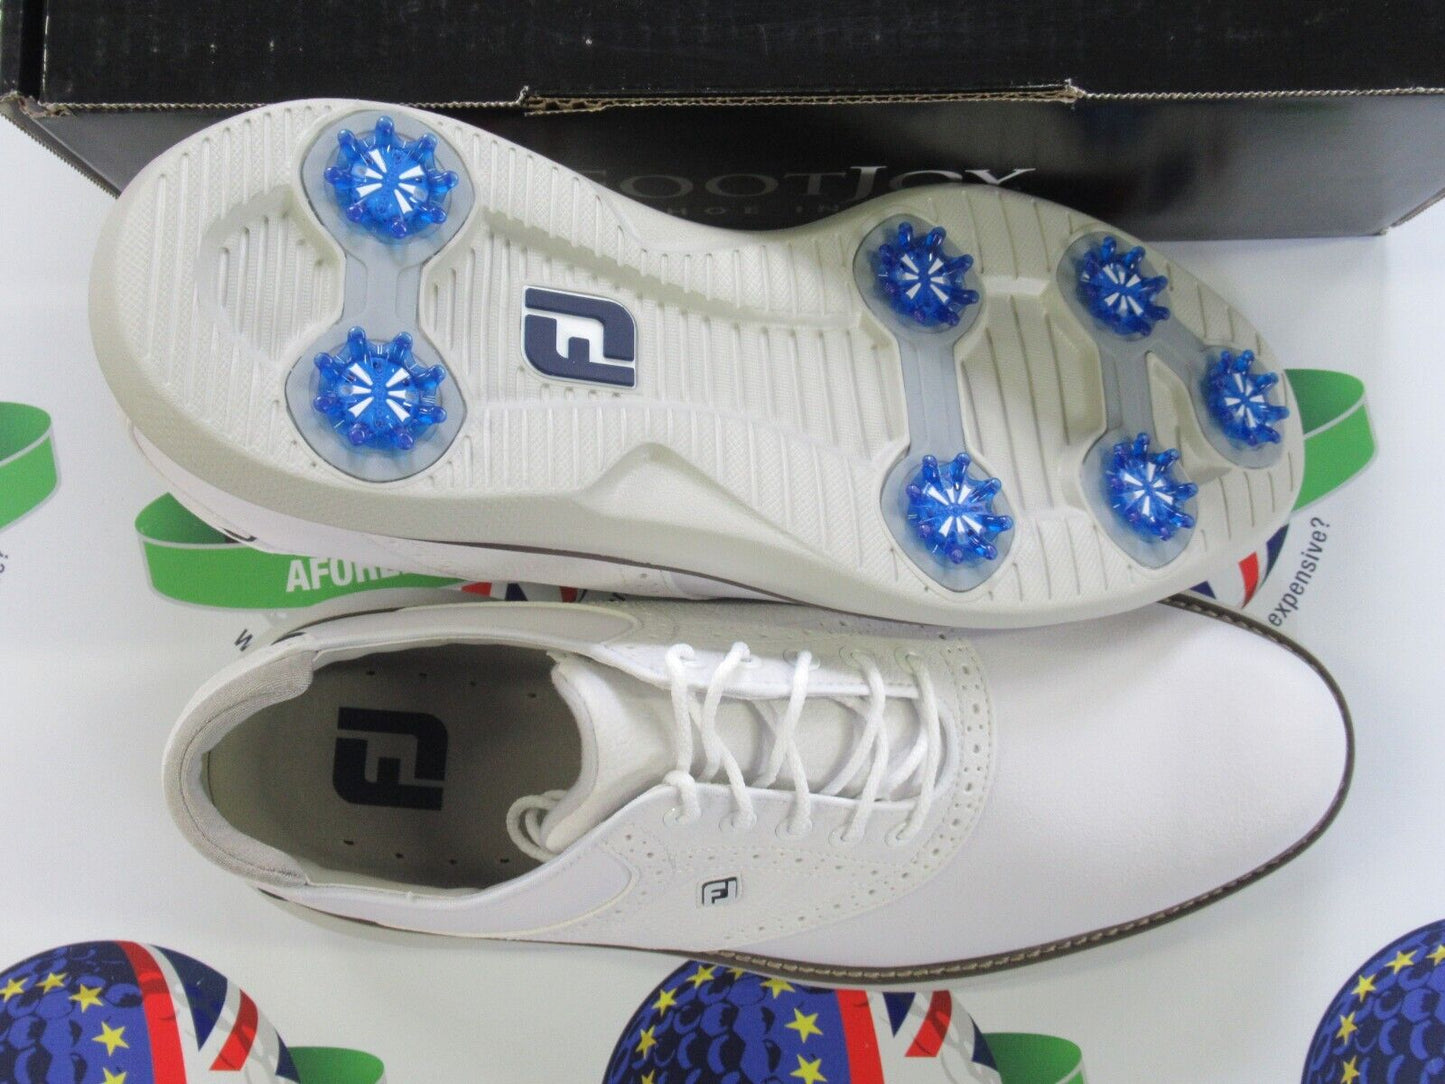 footjoy traditions waterproof golf shoes 57903k white 9.5 medium